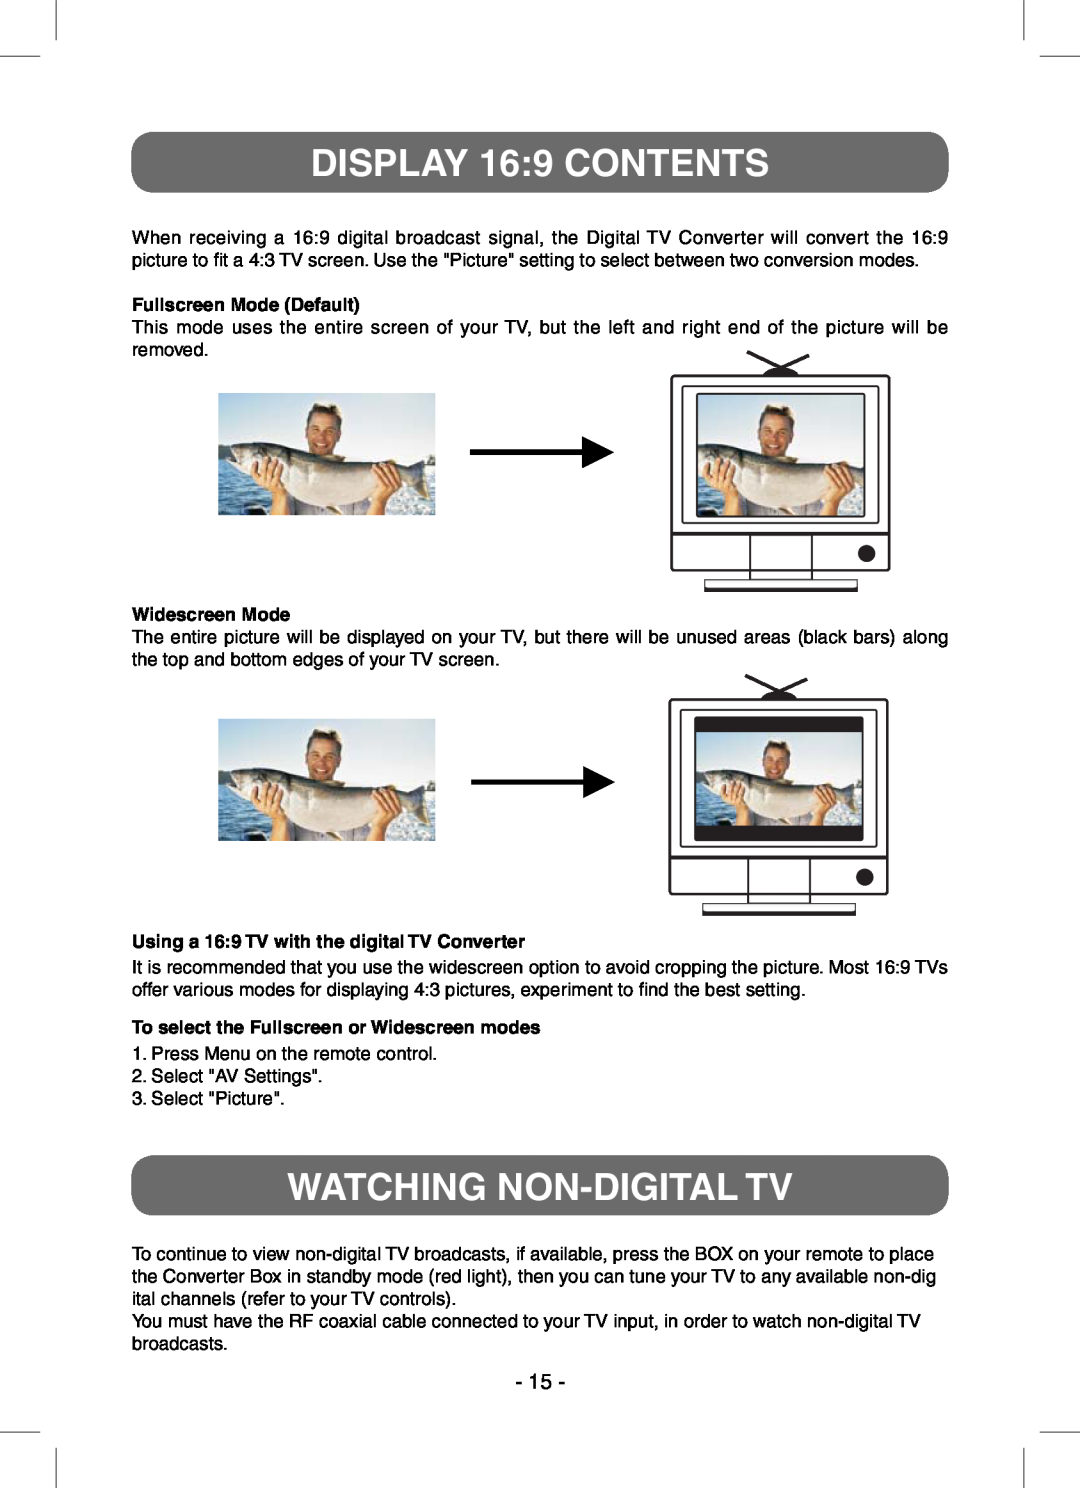 RCA STB7766C user manual DISPLAY 169 CONTENTS, Watching Non-Digital Tv, Fullscreen Mode Default, Widescreen Mode 